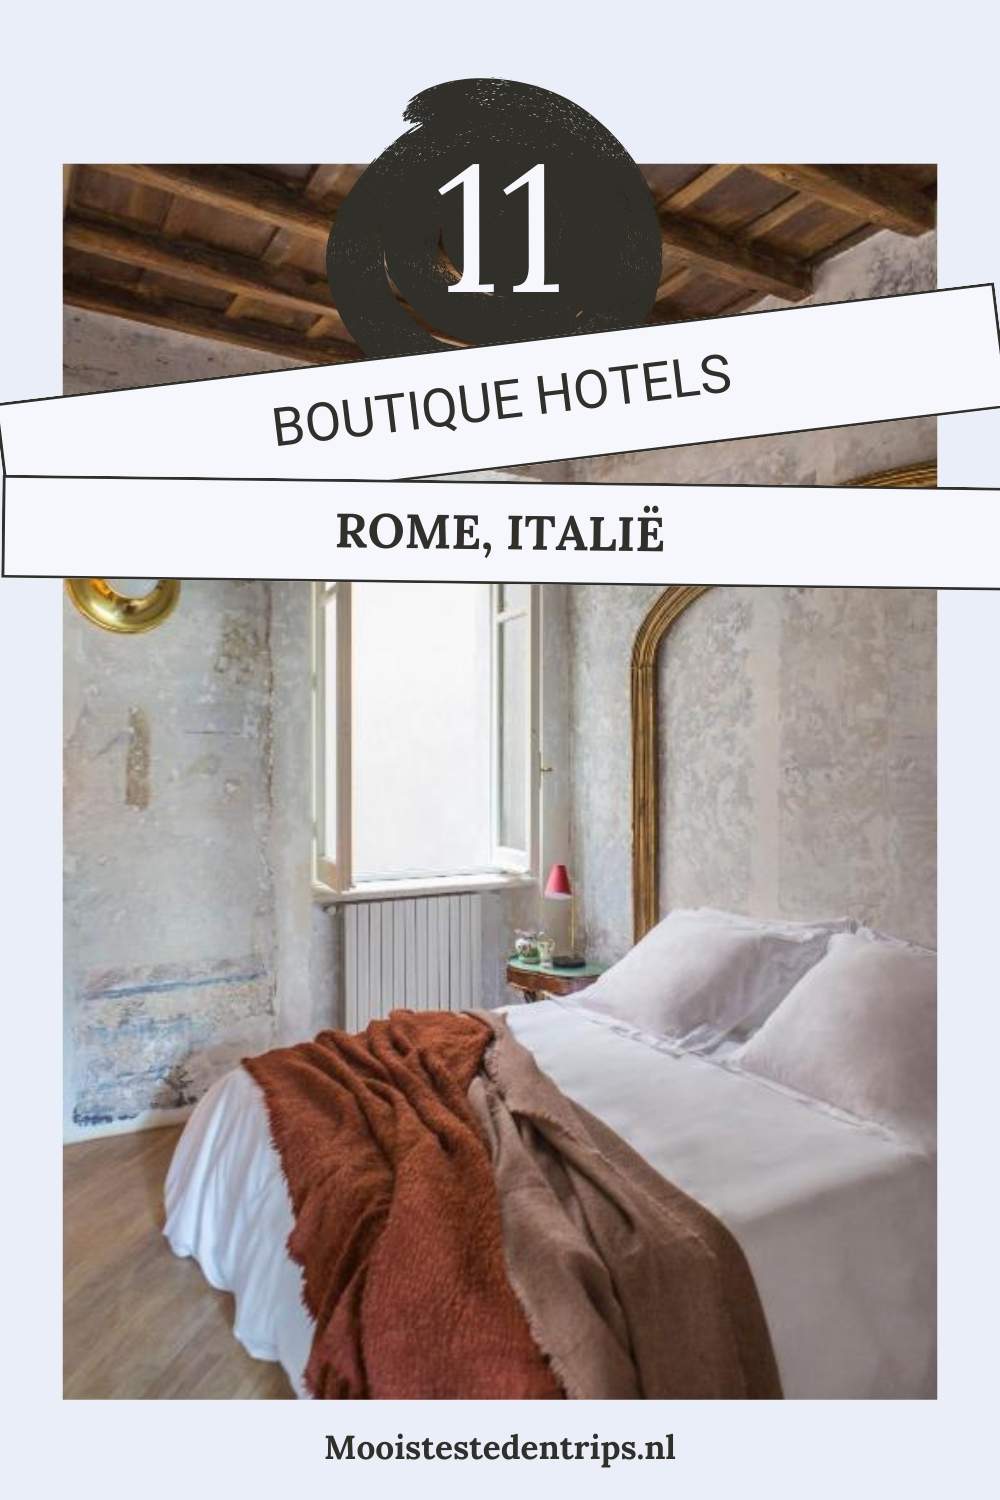 Boutique Hotel Rome, ontdek de mooiste boutique hotels in Rome | Mooistestedentrips.nl